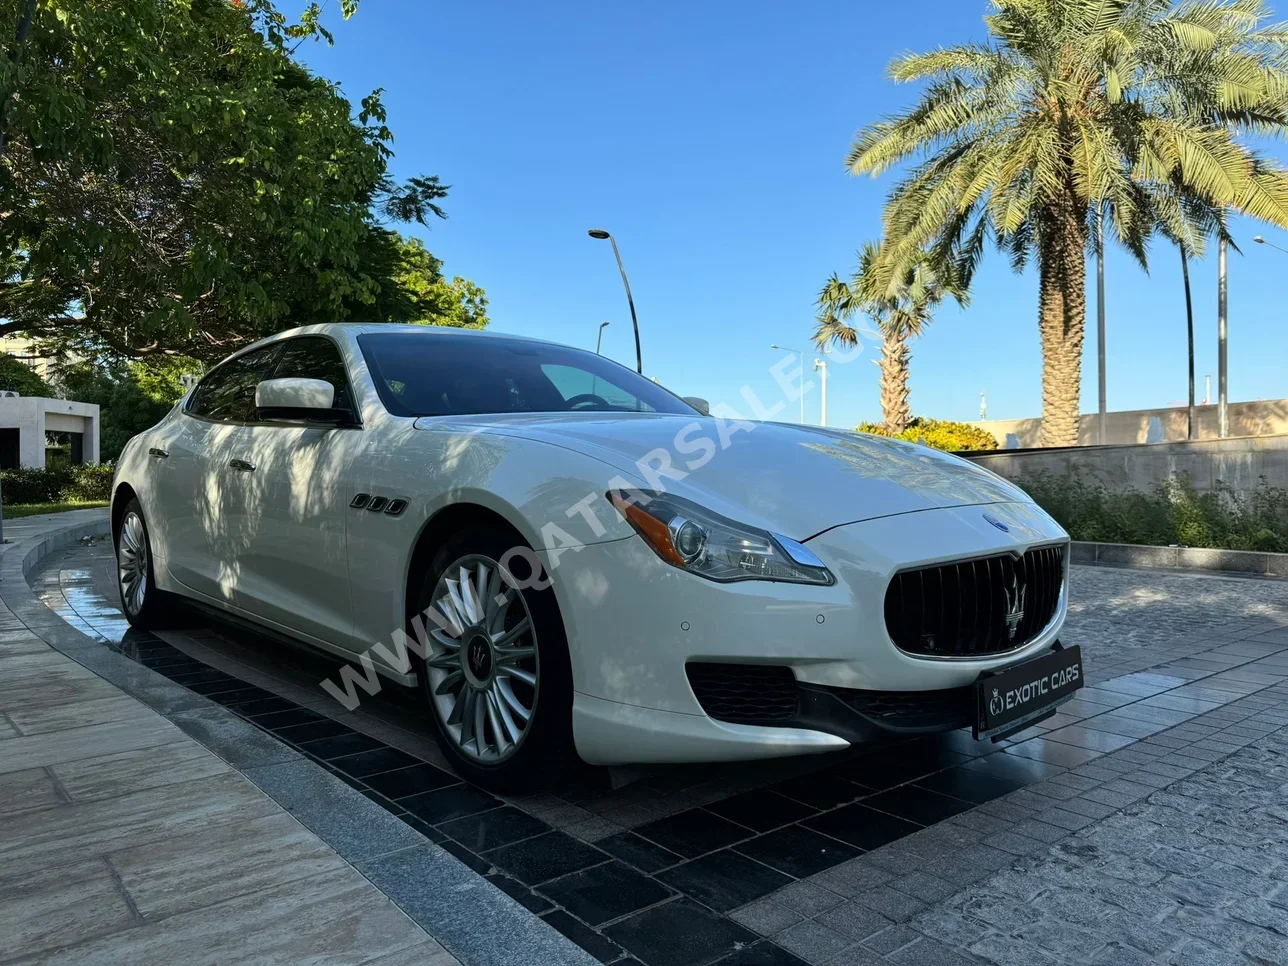 Maserati  Quattroporte  2015  Automatic  99,000 Km  6 Cylinder  Rear Wheel Drive (RWD)  Sedan  White